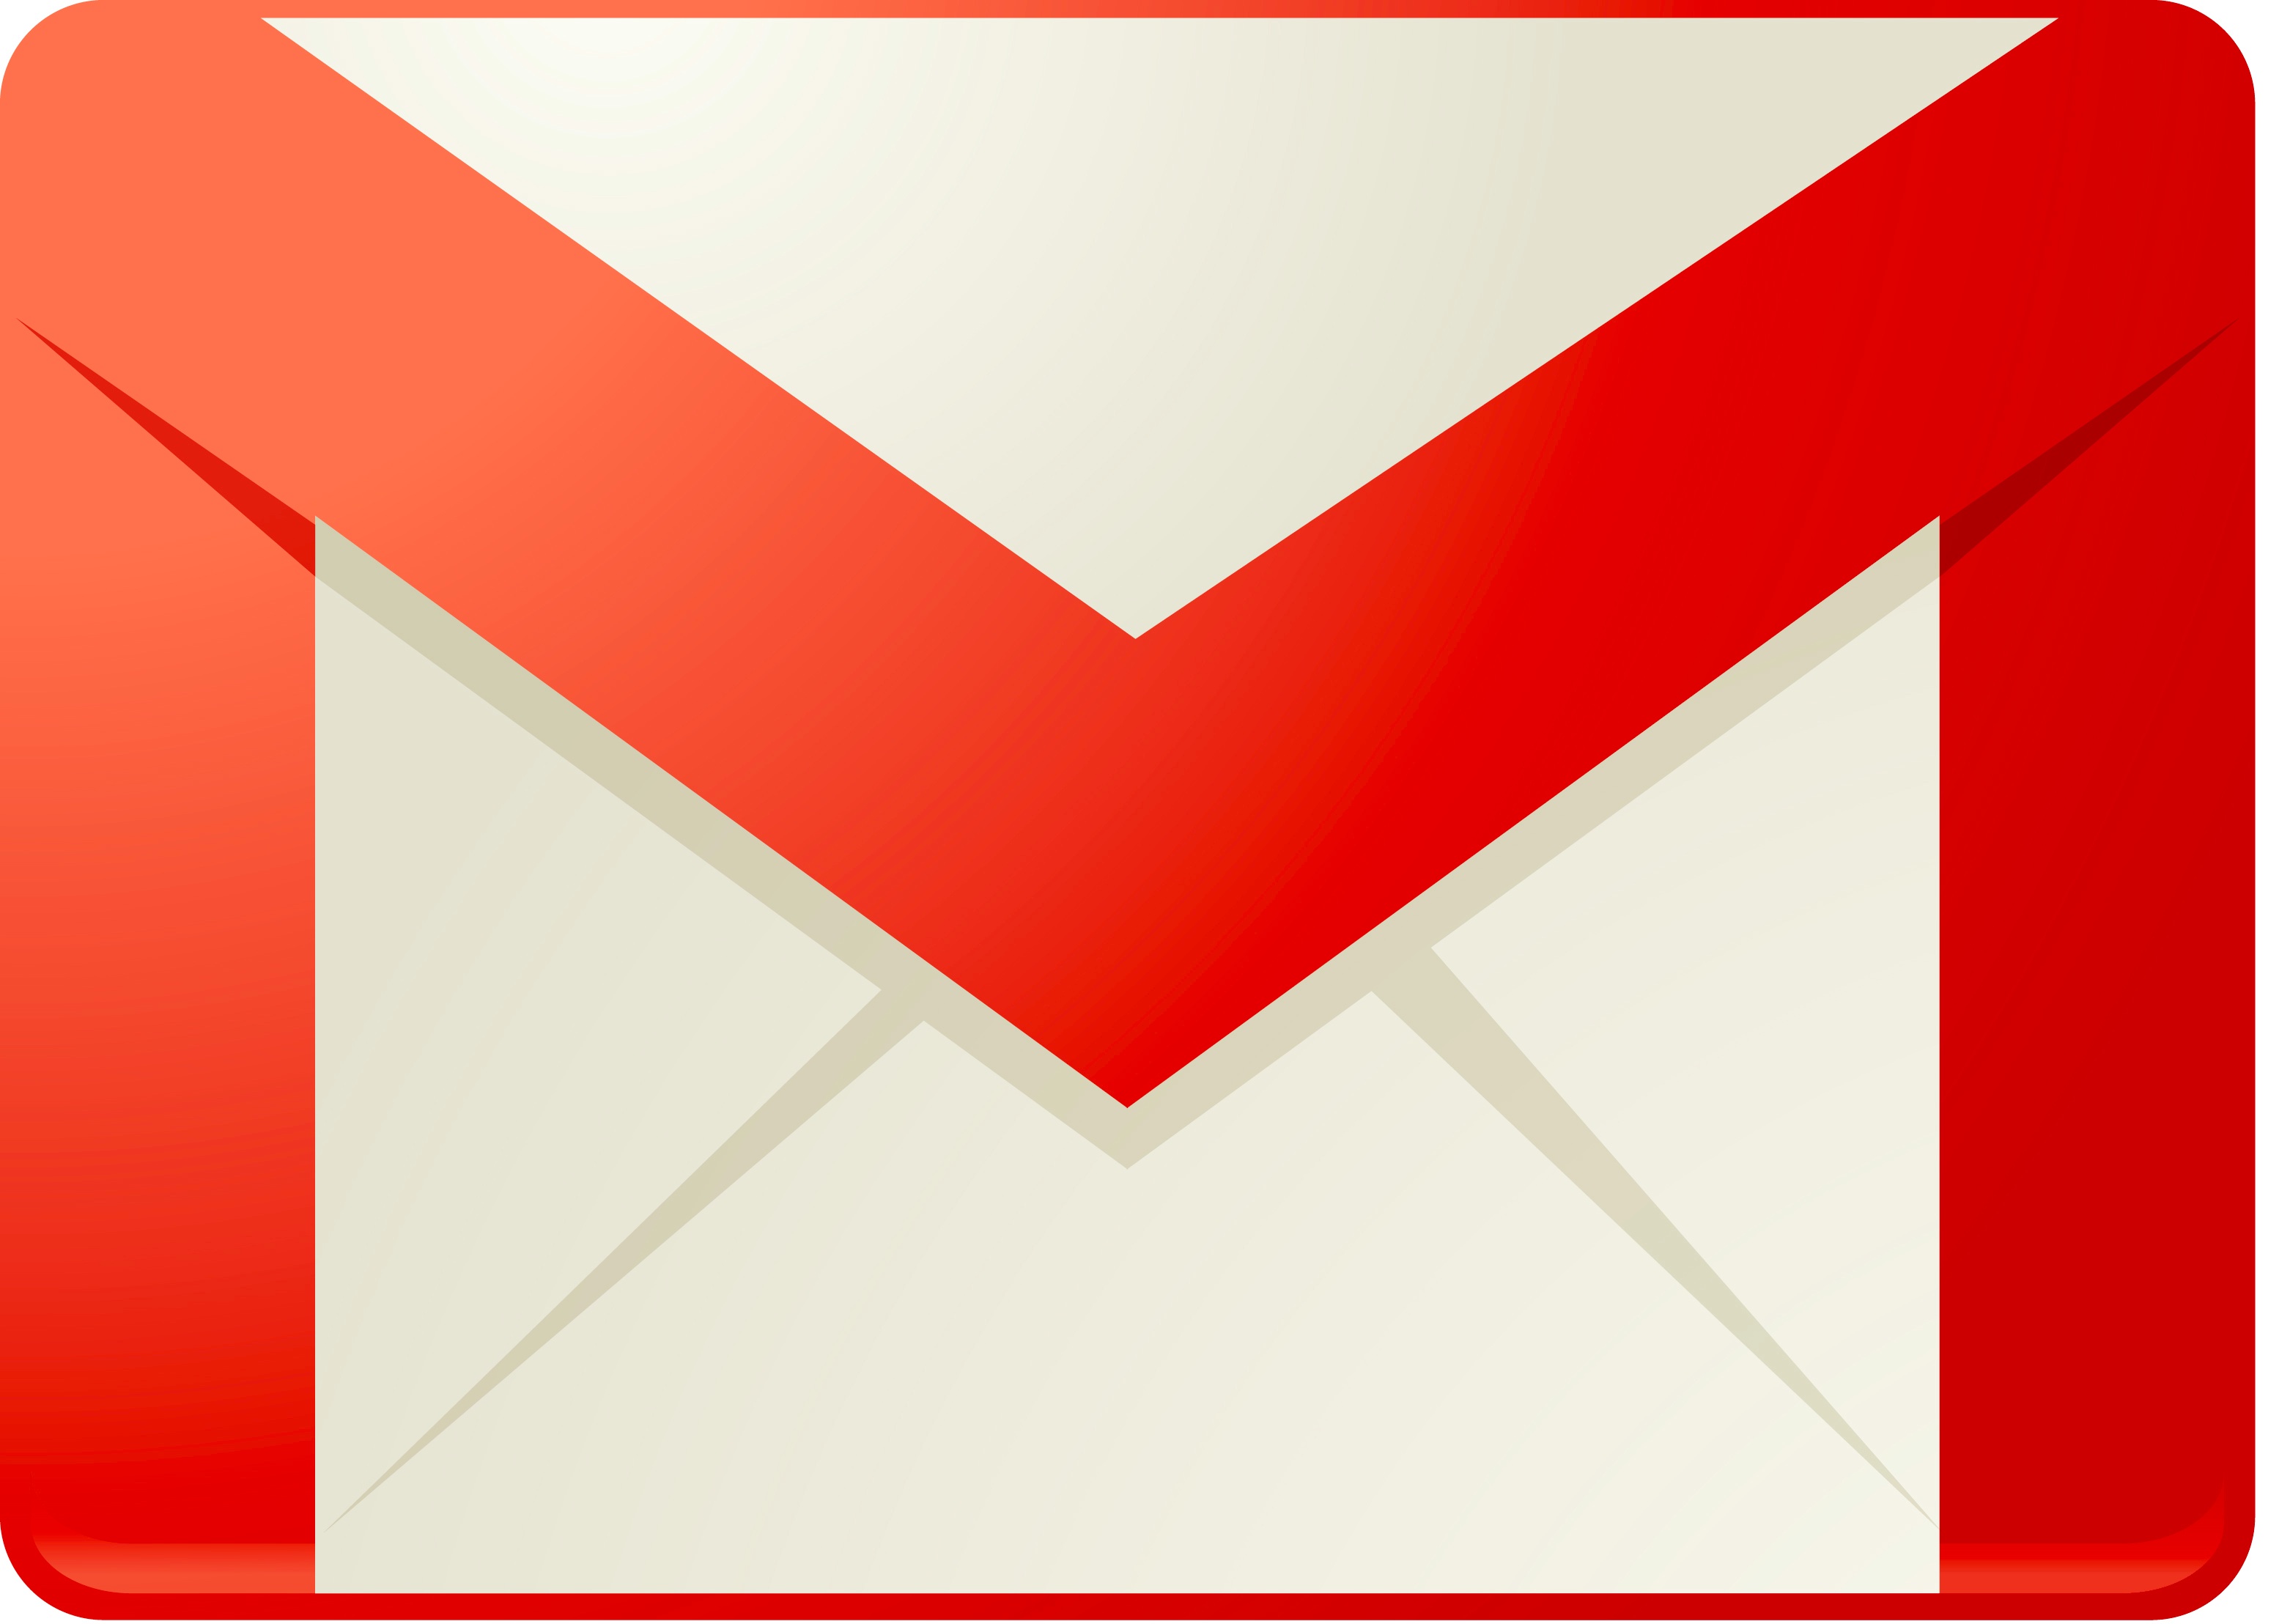 L gmail com. Gmail лого. Gmail картинка. Gmail логотип PNG.